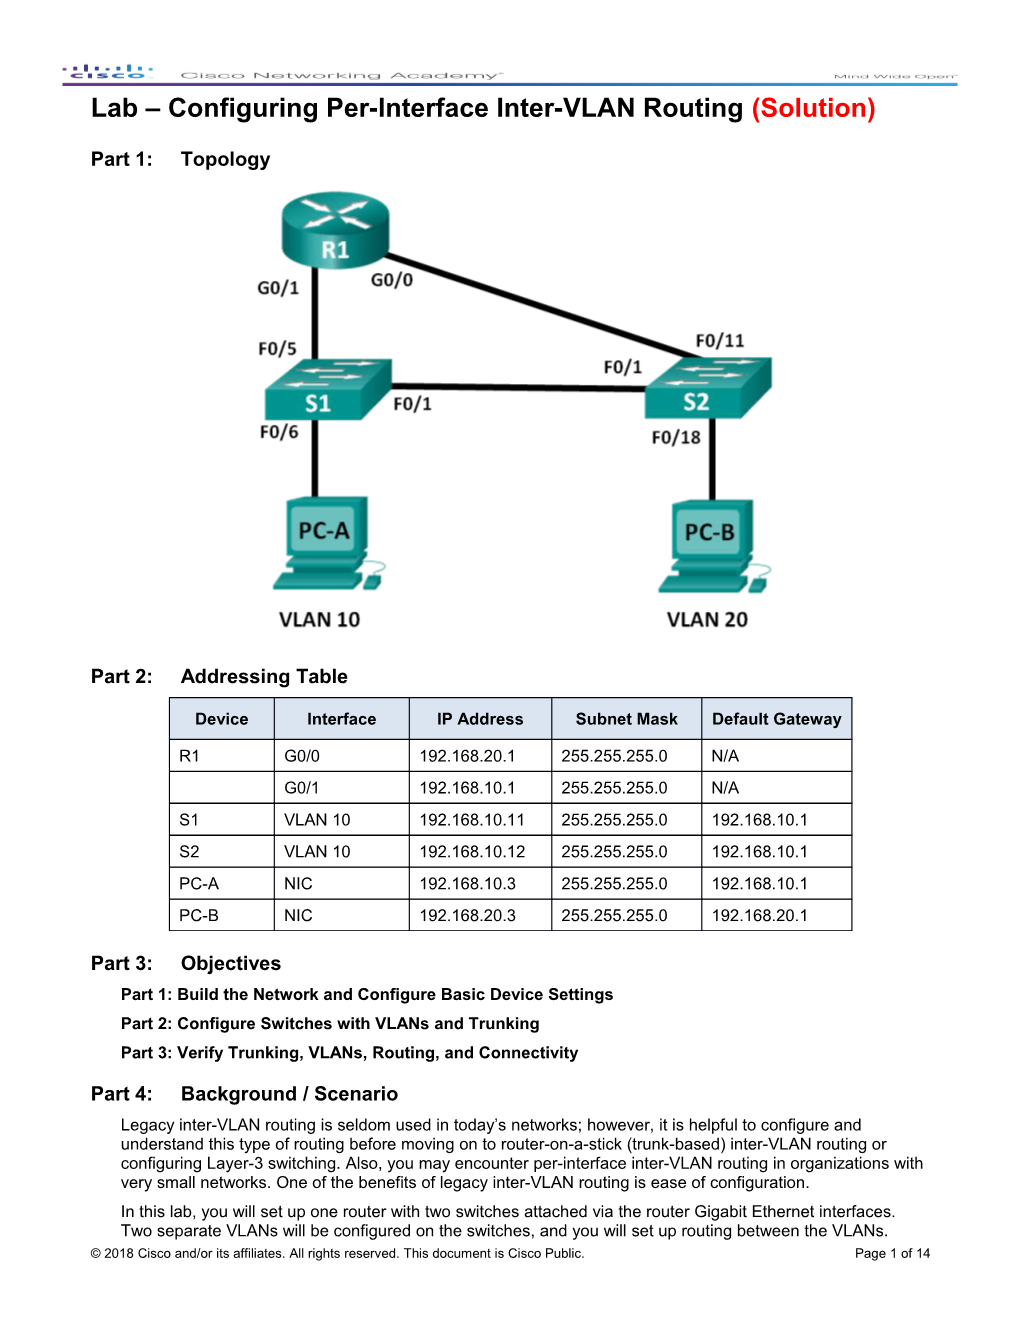 Lab Configuring Per-Interface Inter-VLAN Routing